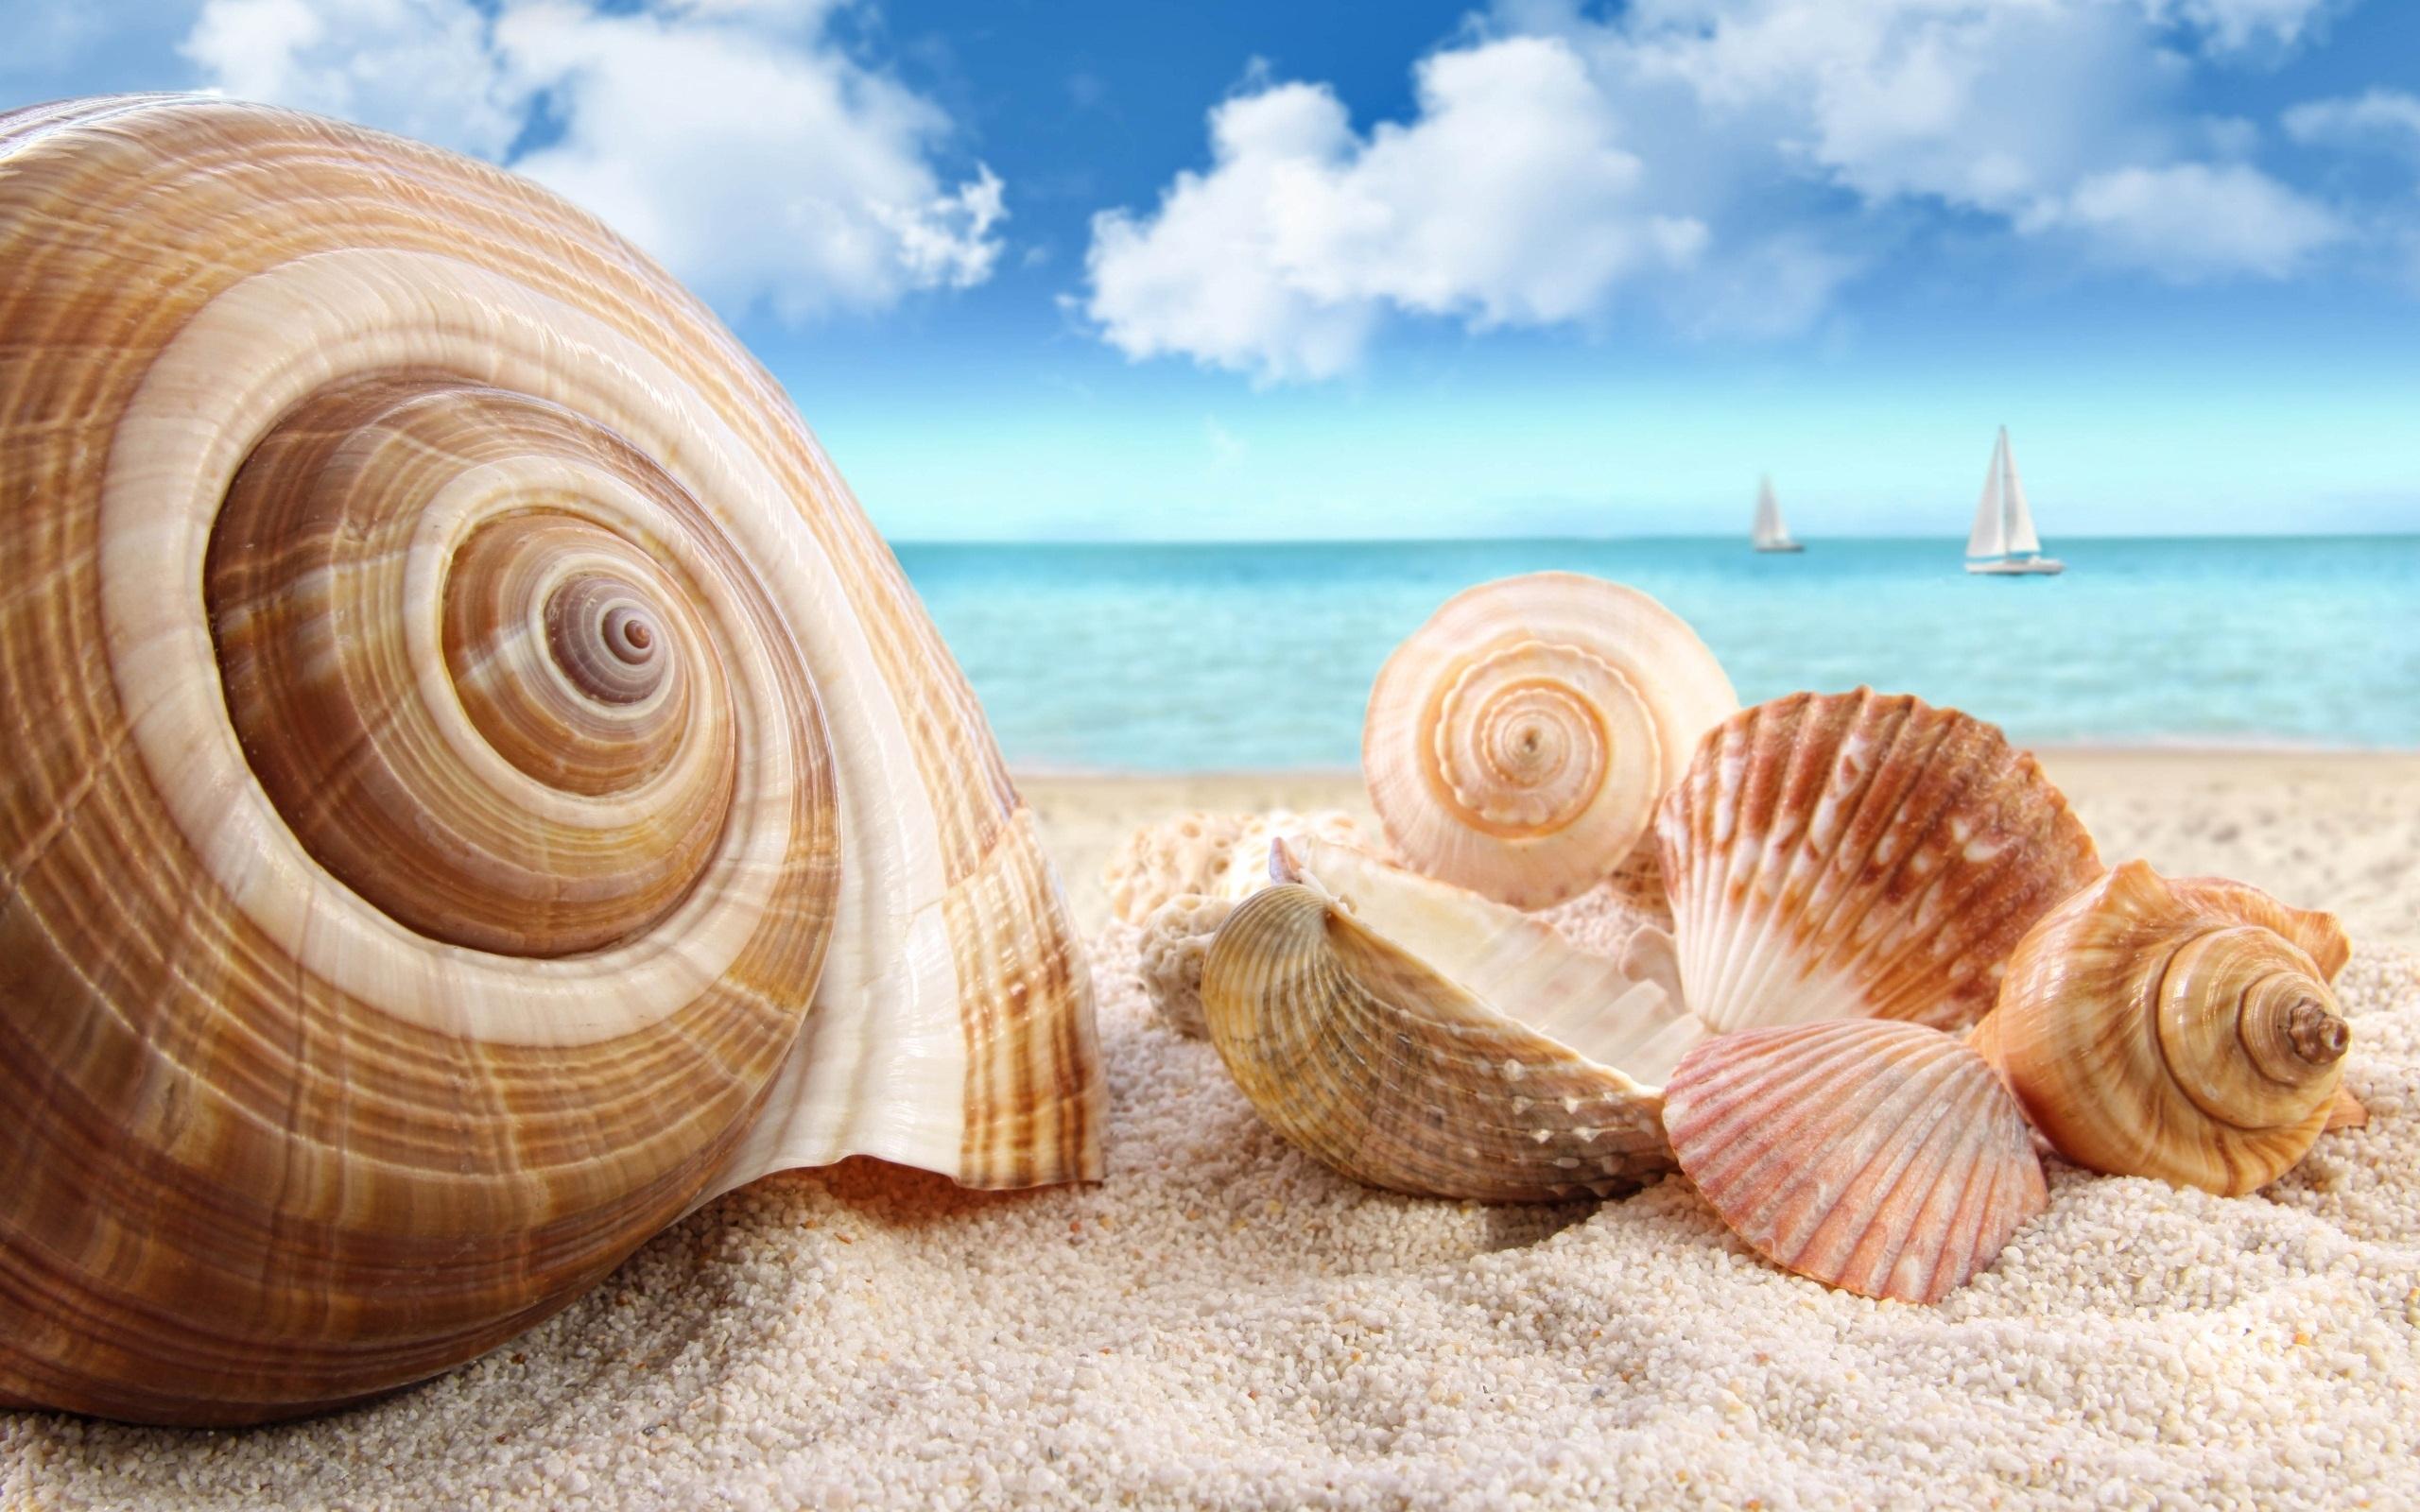 Sea Shells- The Engineer of Ecosystem